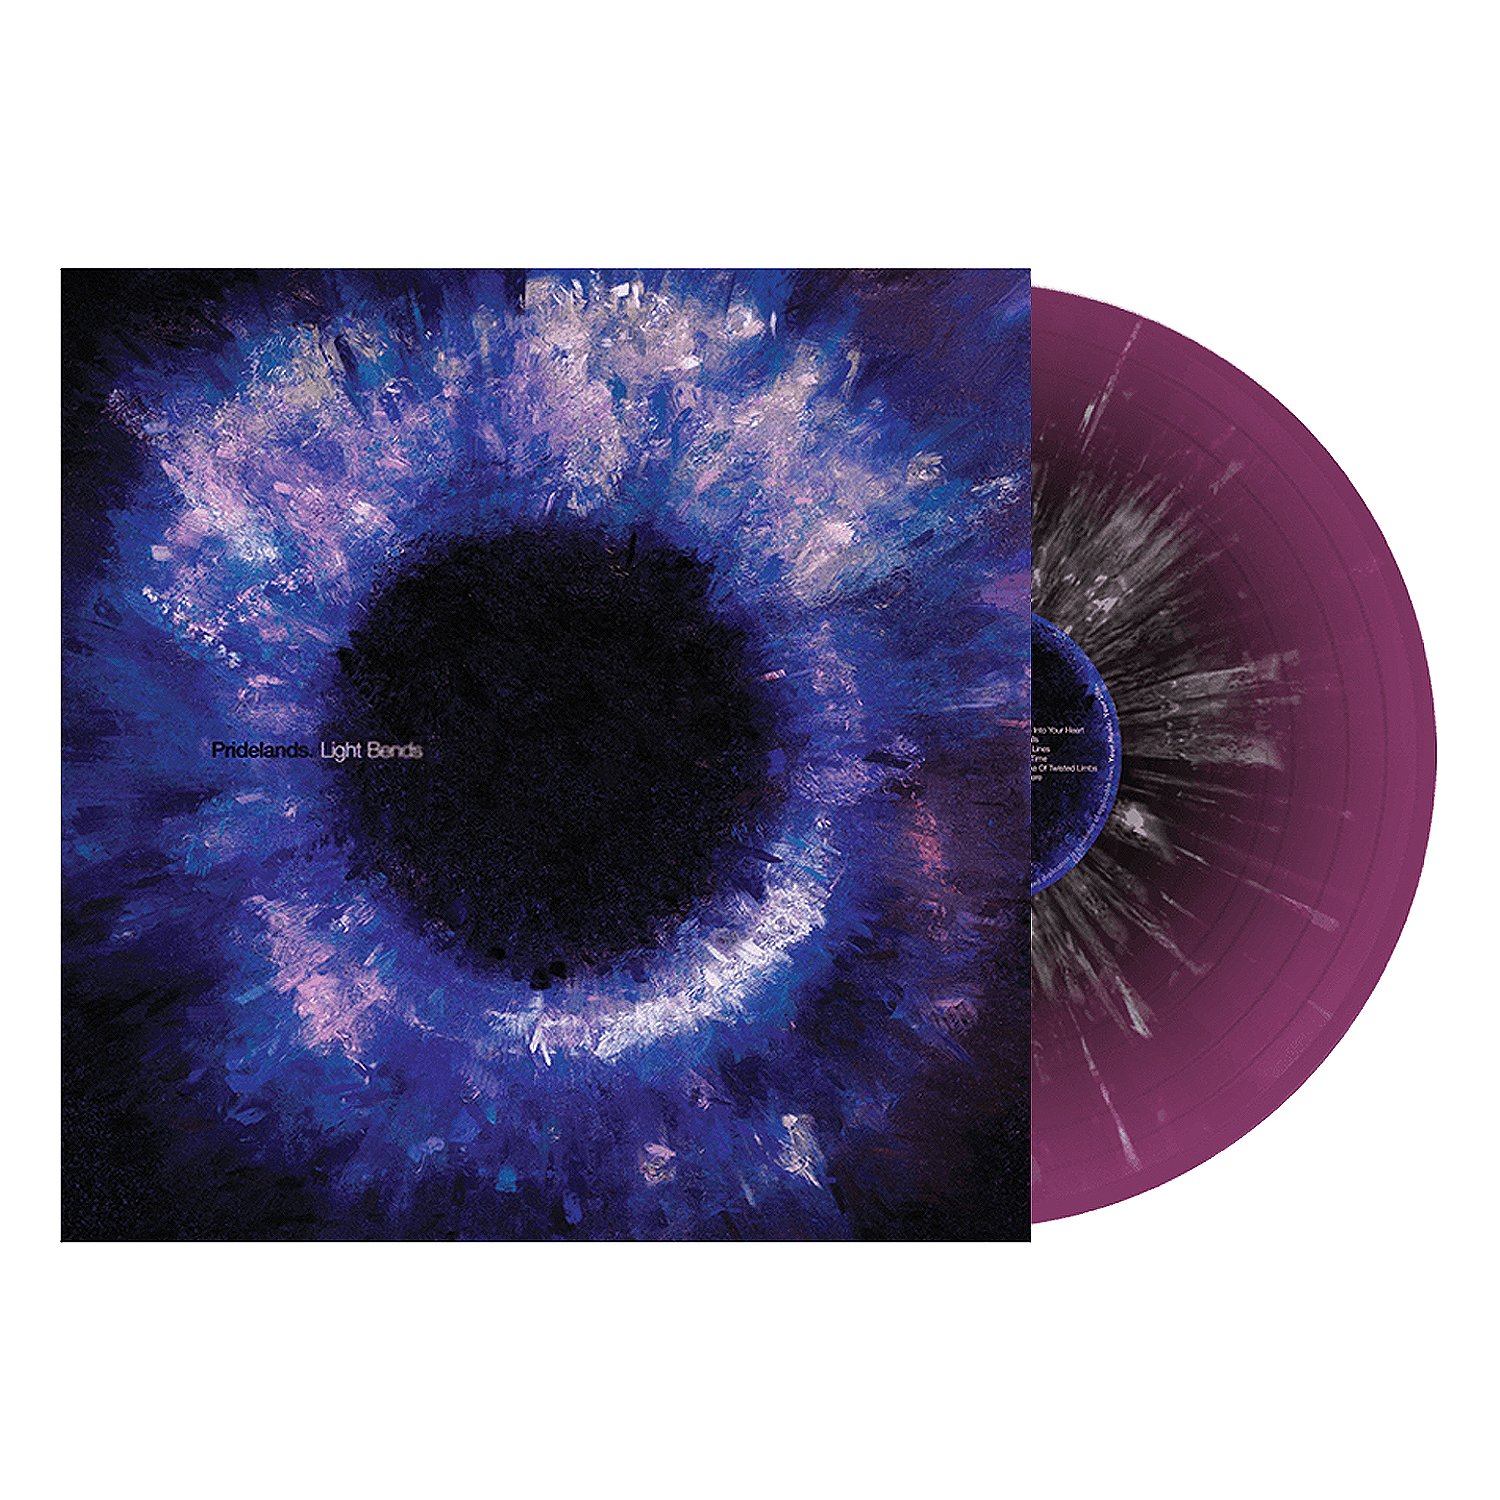 Pridelands - 'Light Bends' Black in Purple w/ White Splatter Vinyl LP